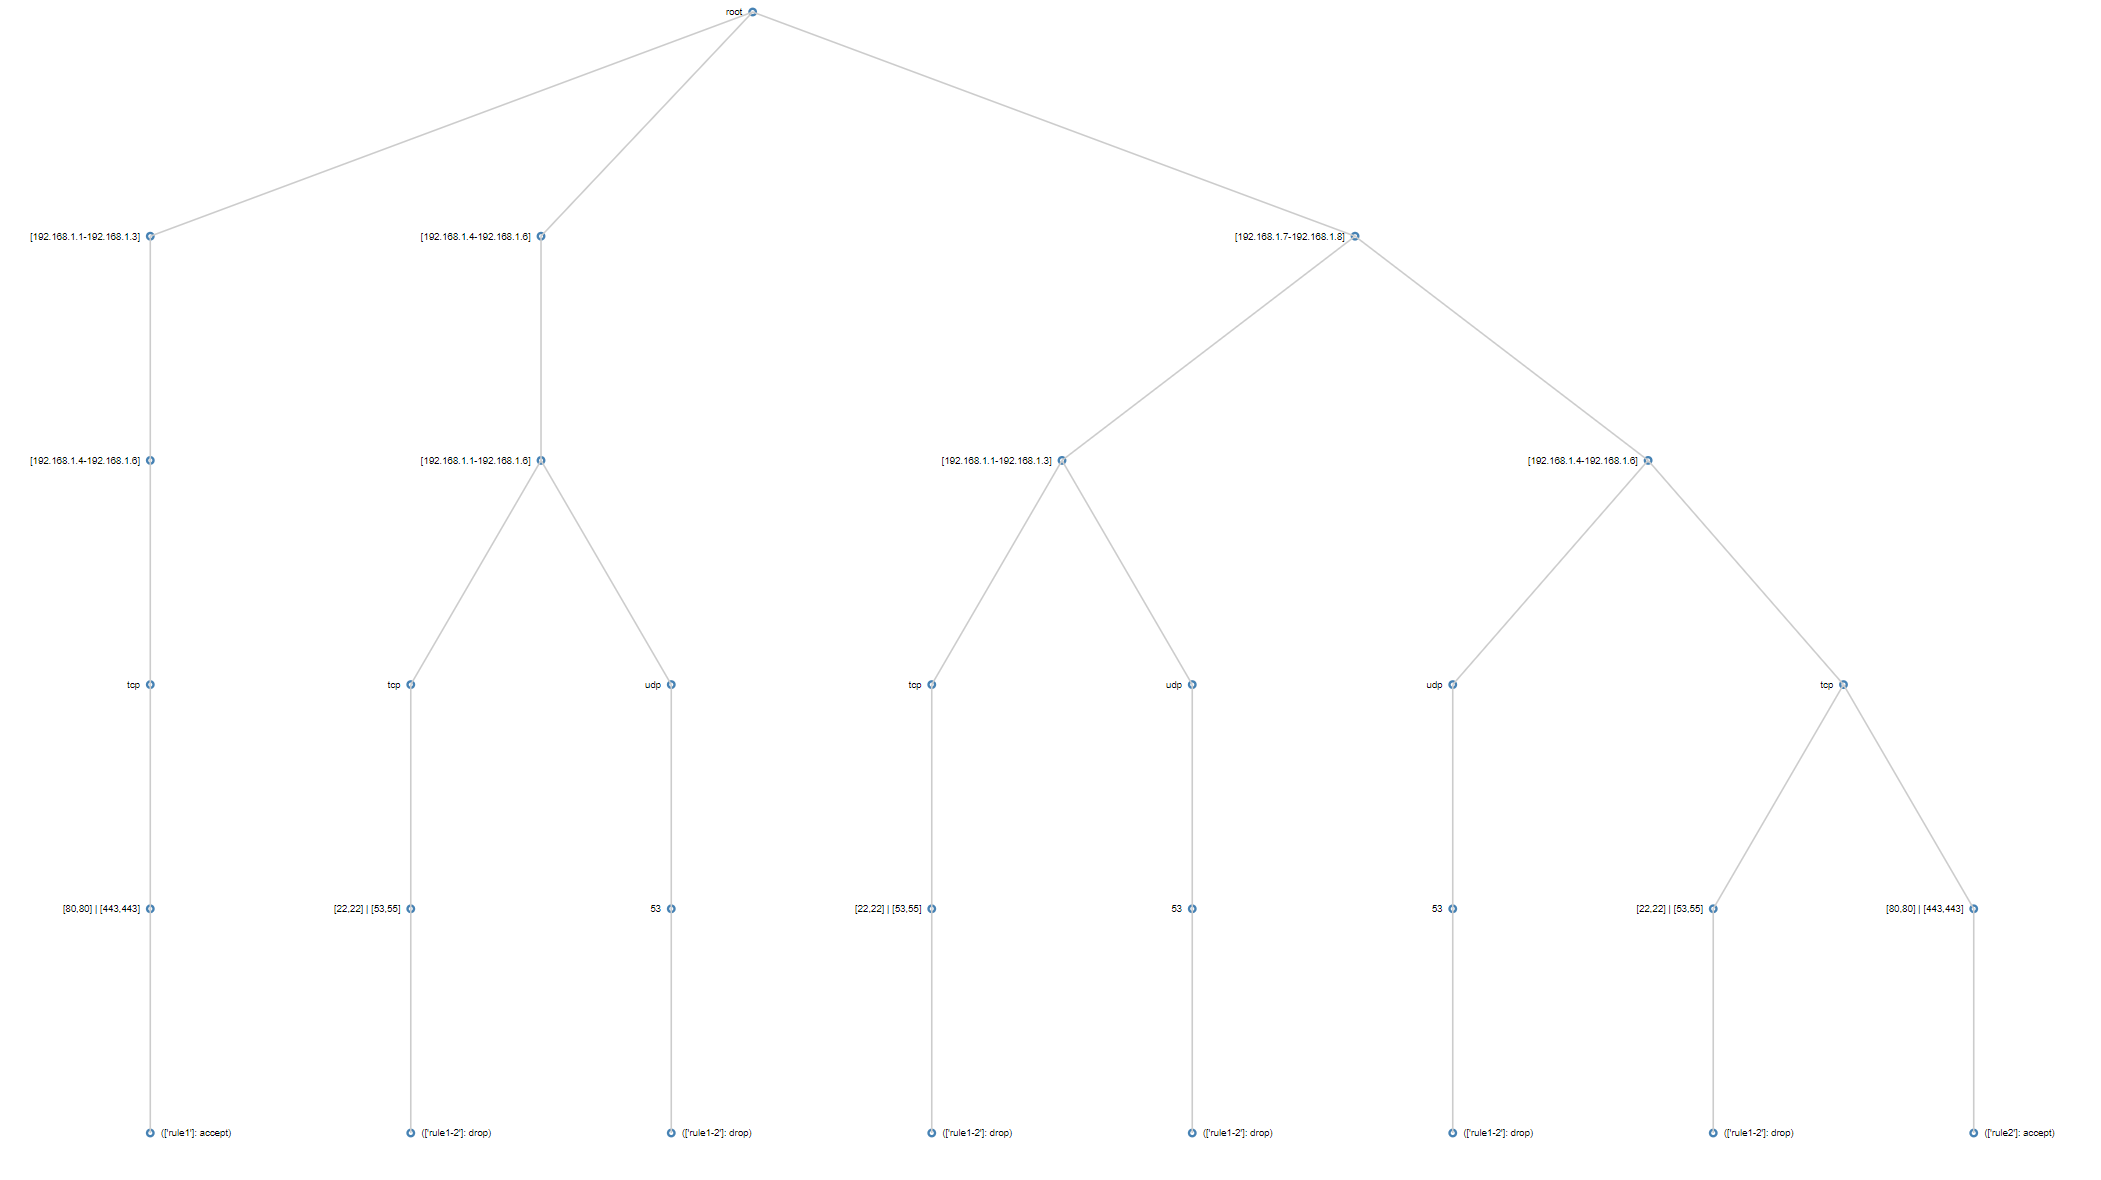 Firewall decision tree visualized